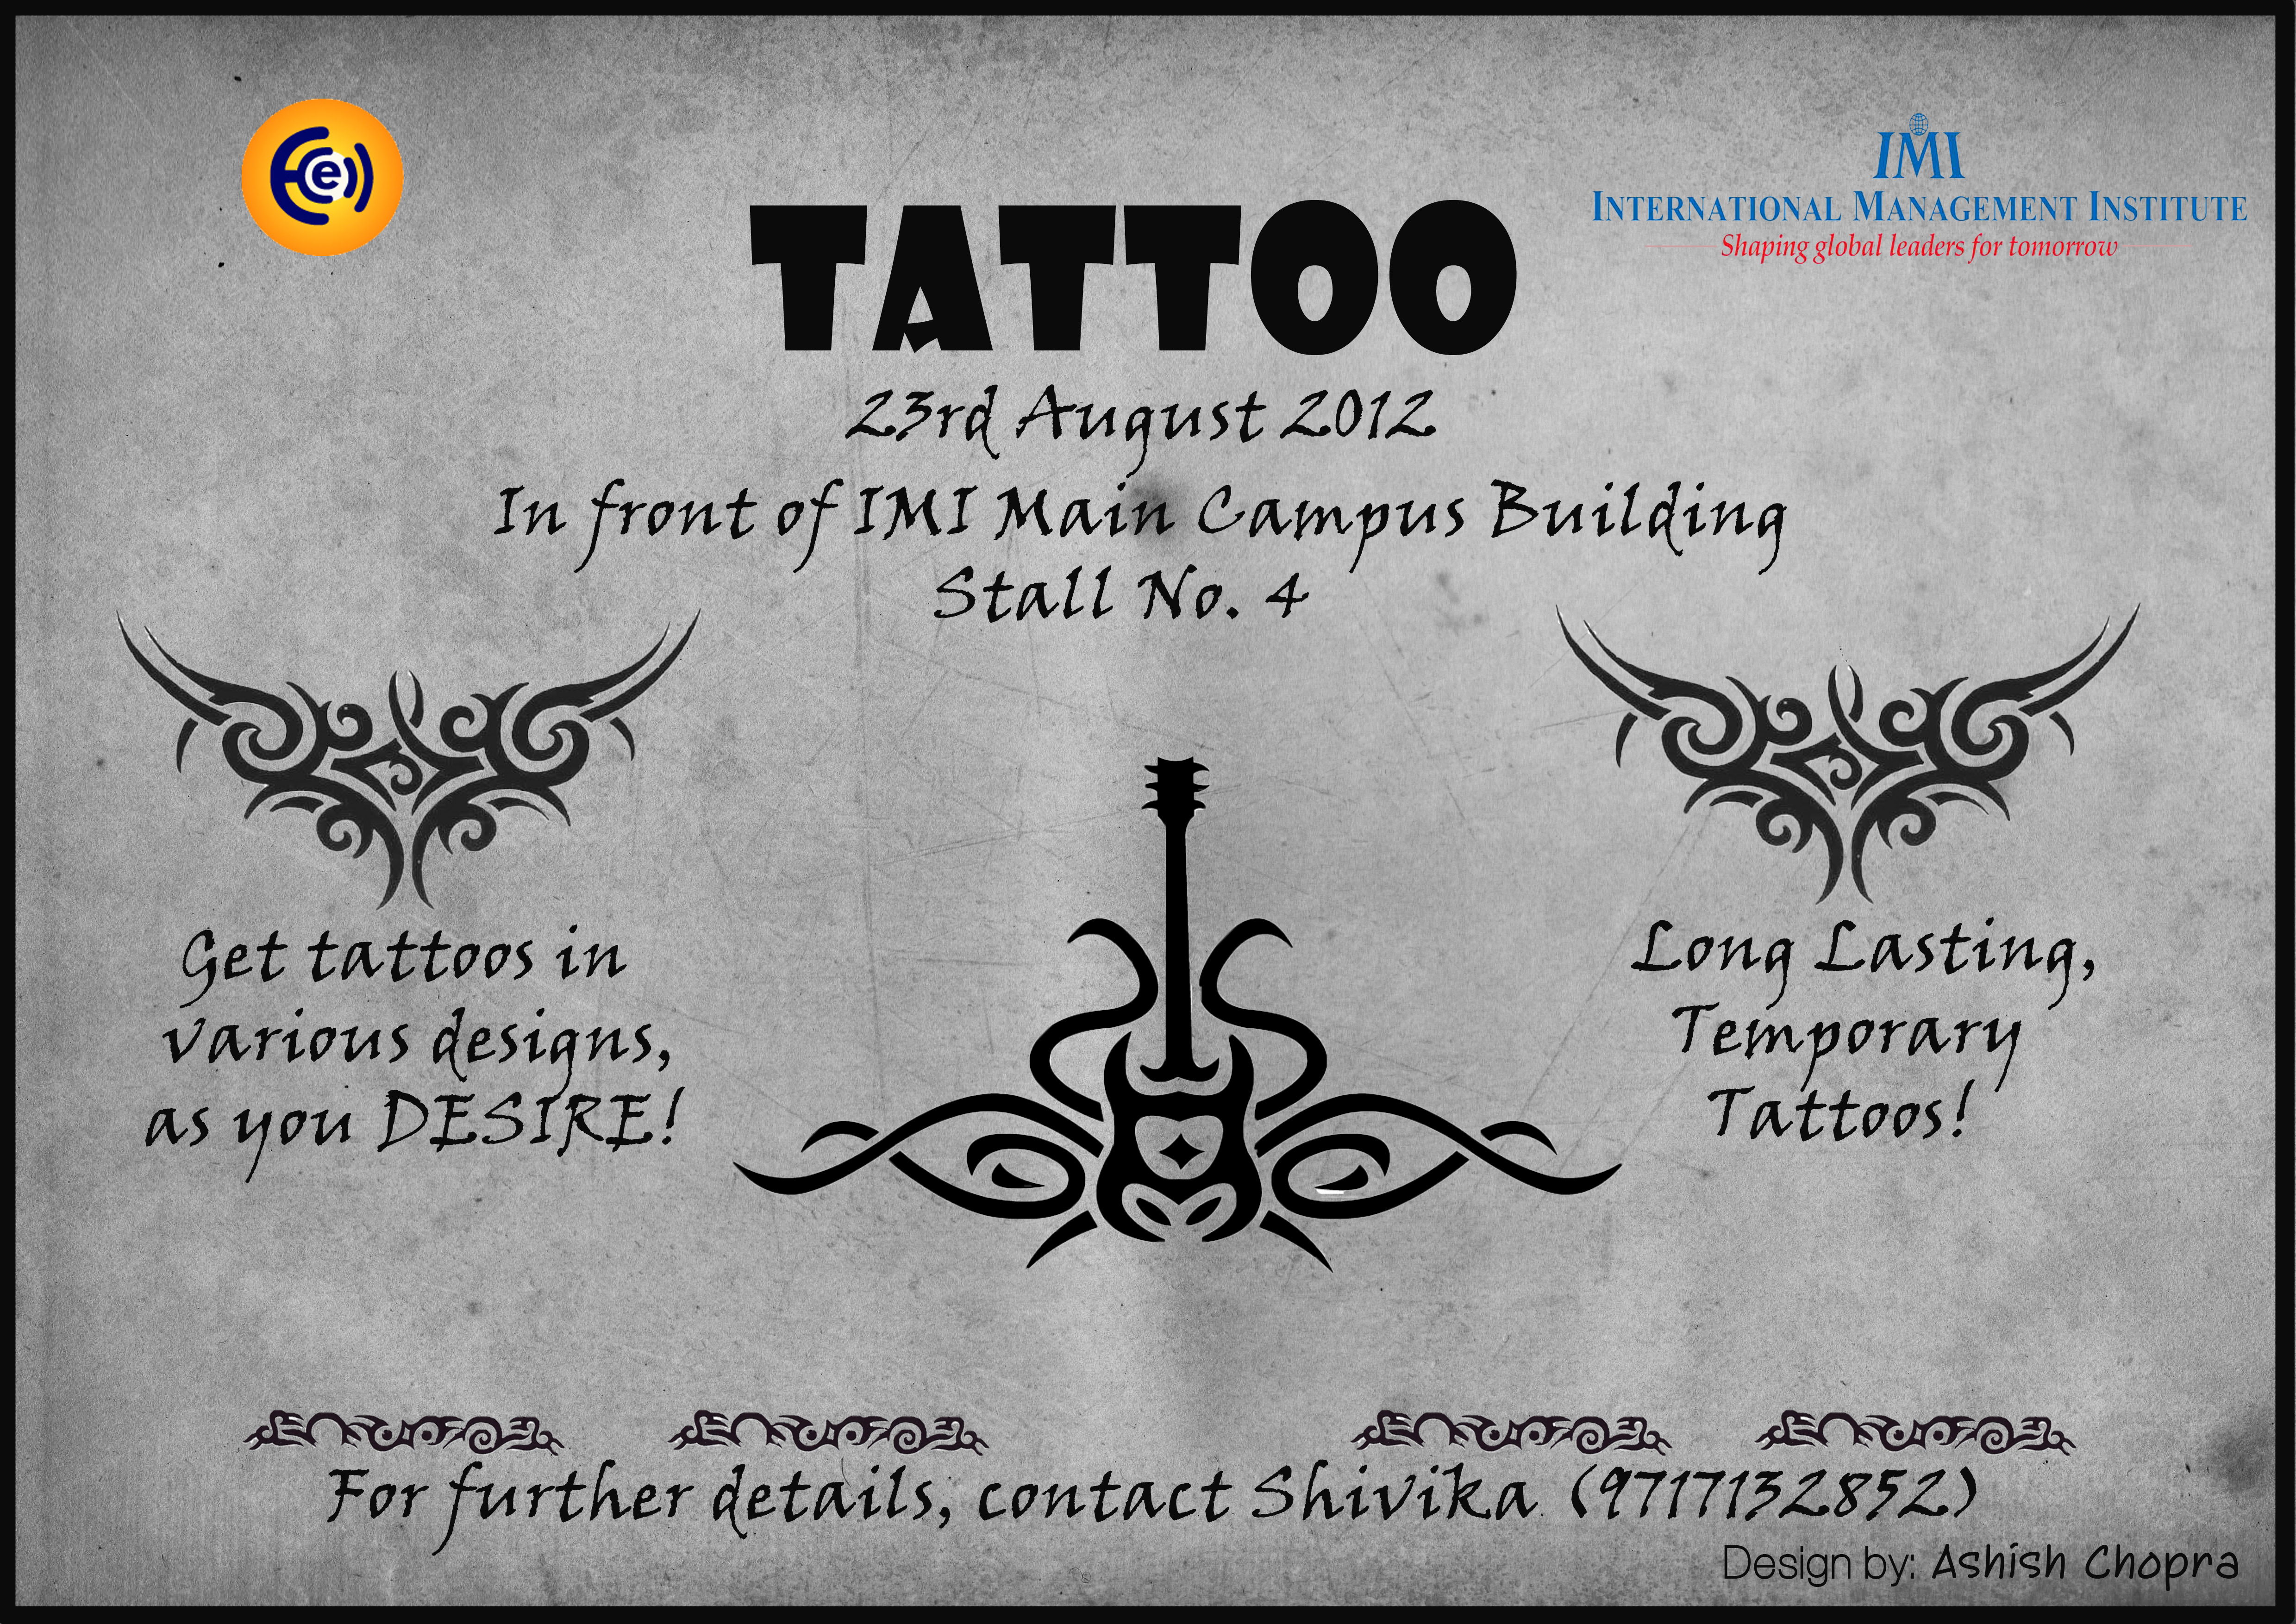 Tattoo Training in Jaipur - Home